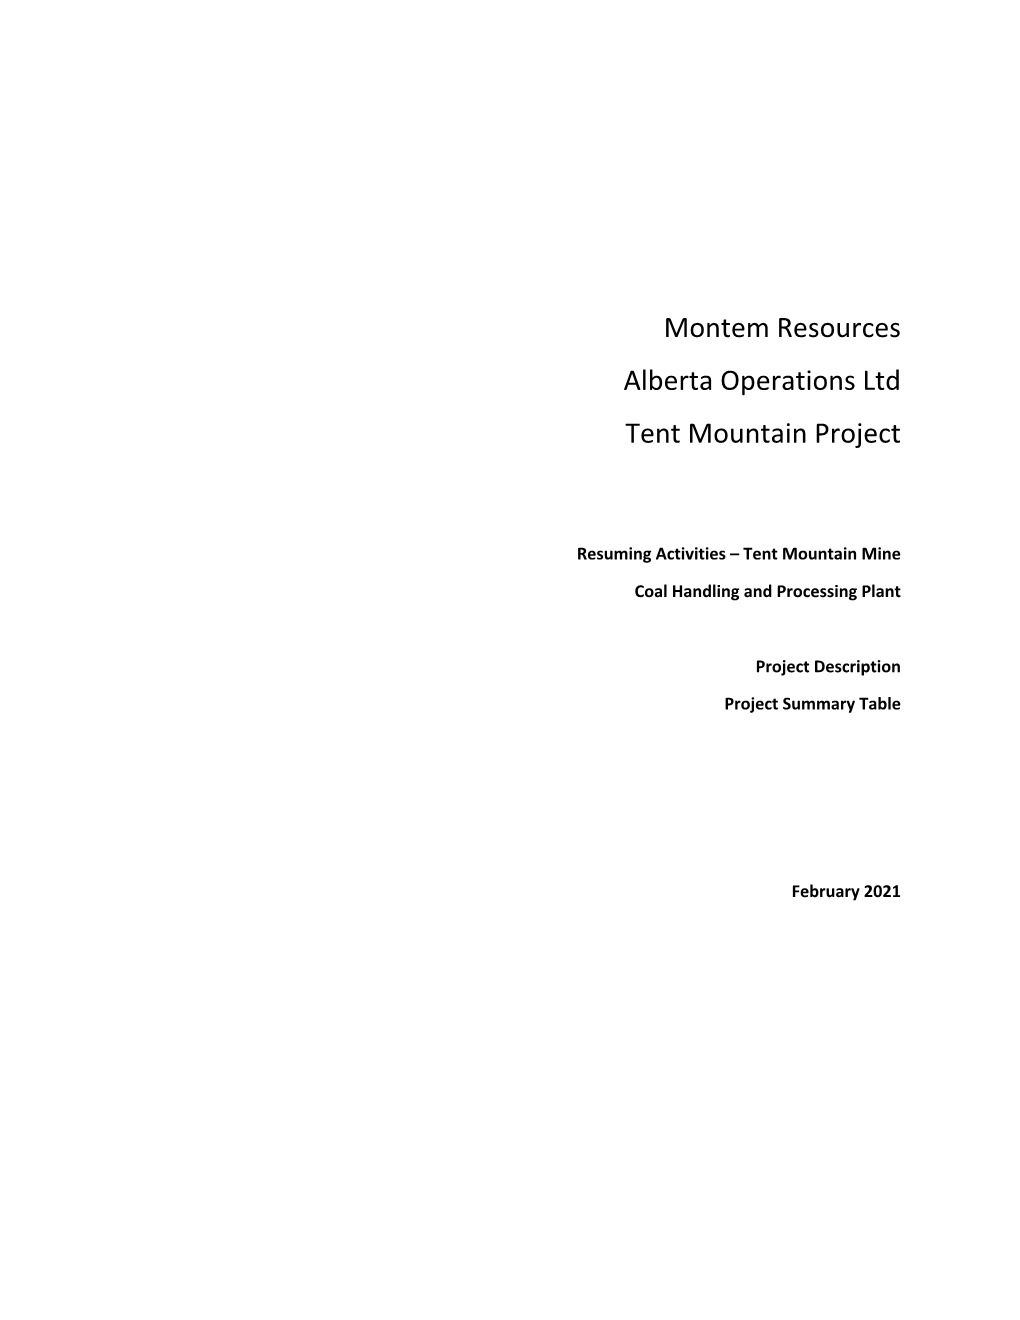 Montem Resources Alberta Operations Ltd Tent Mountain Project